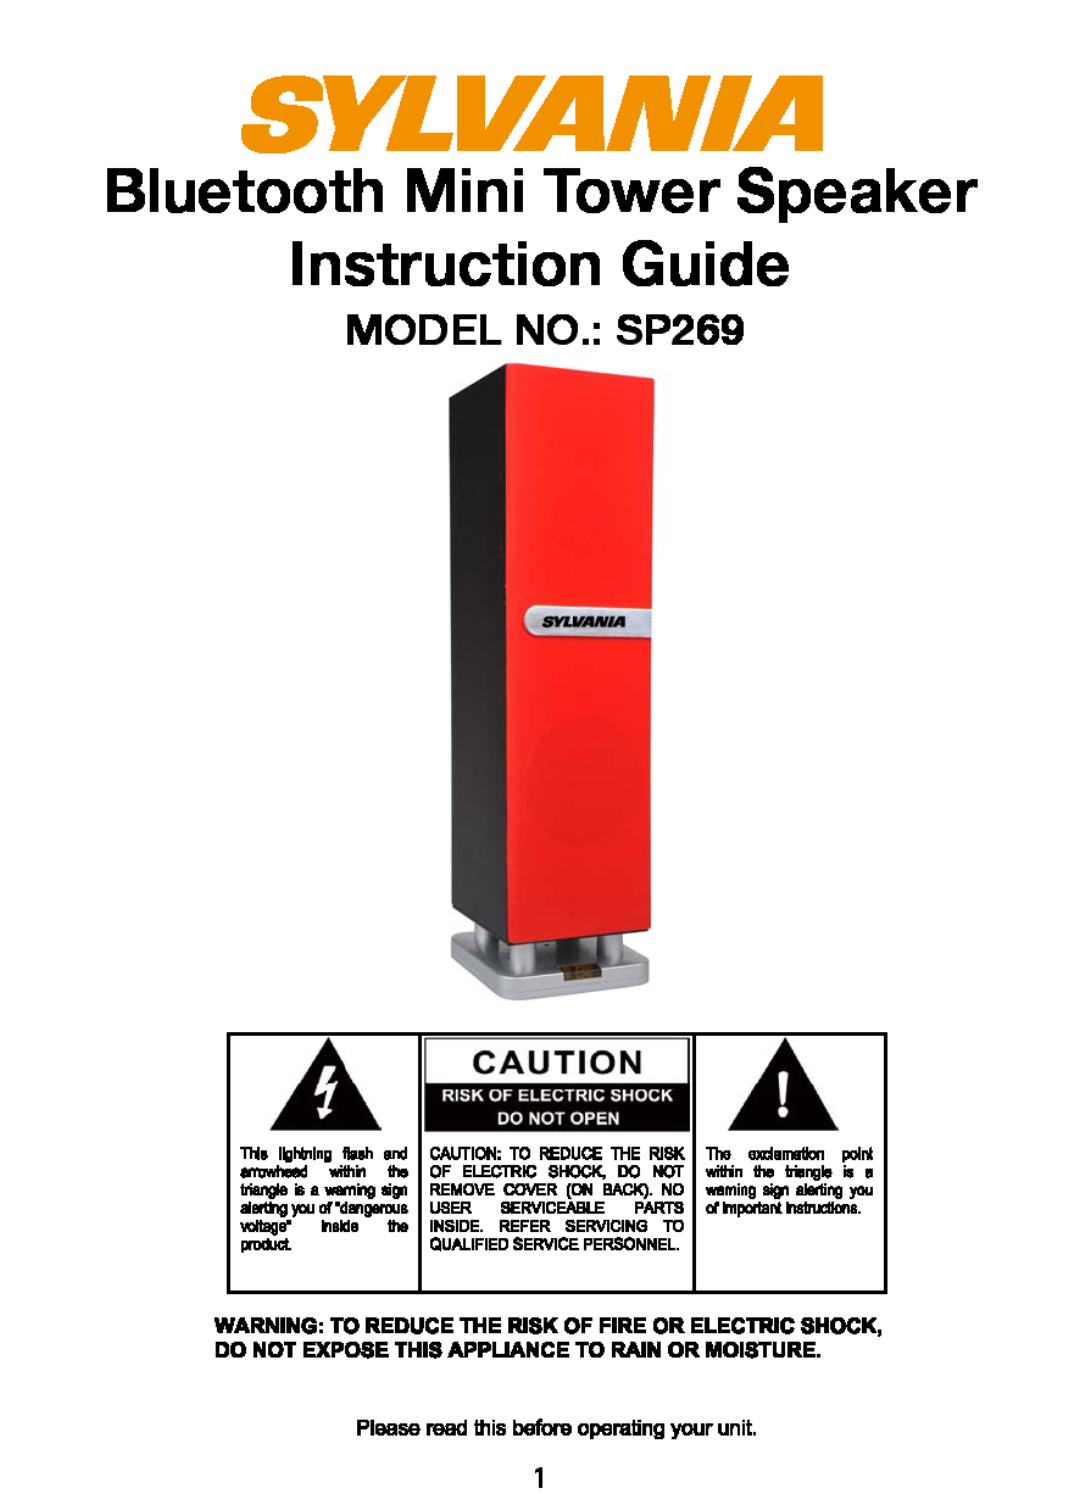 Sylvania manual Bluetooth Mini Tower Speaker Instruction Guide, MODEL NO. SP269 